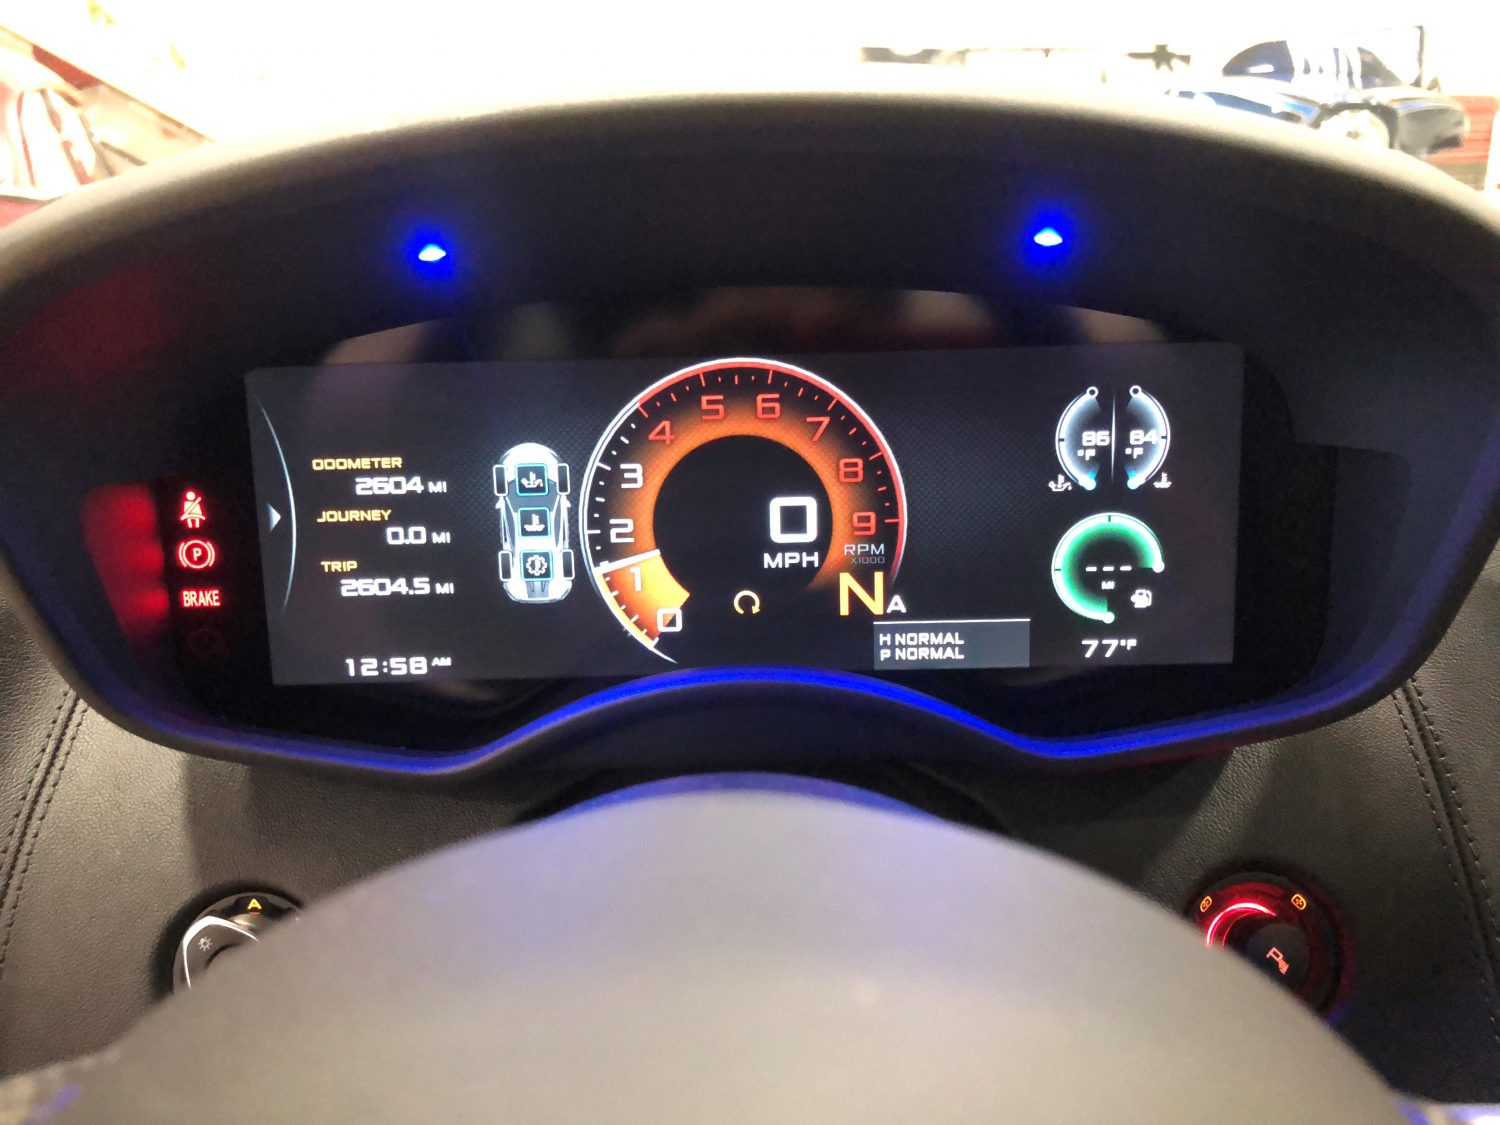 Custom K40 Police Radar Detector Alert LED's flashing Installed on 2018 McLaren in Milwaukee, WI